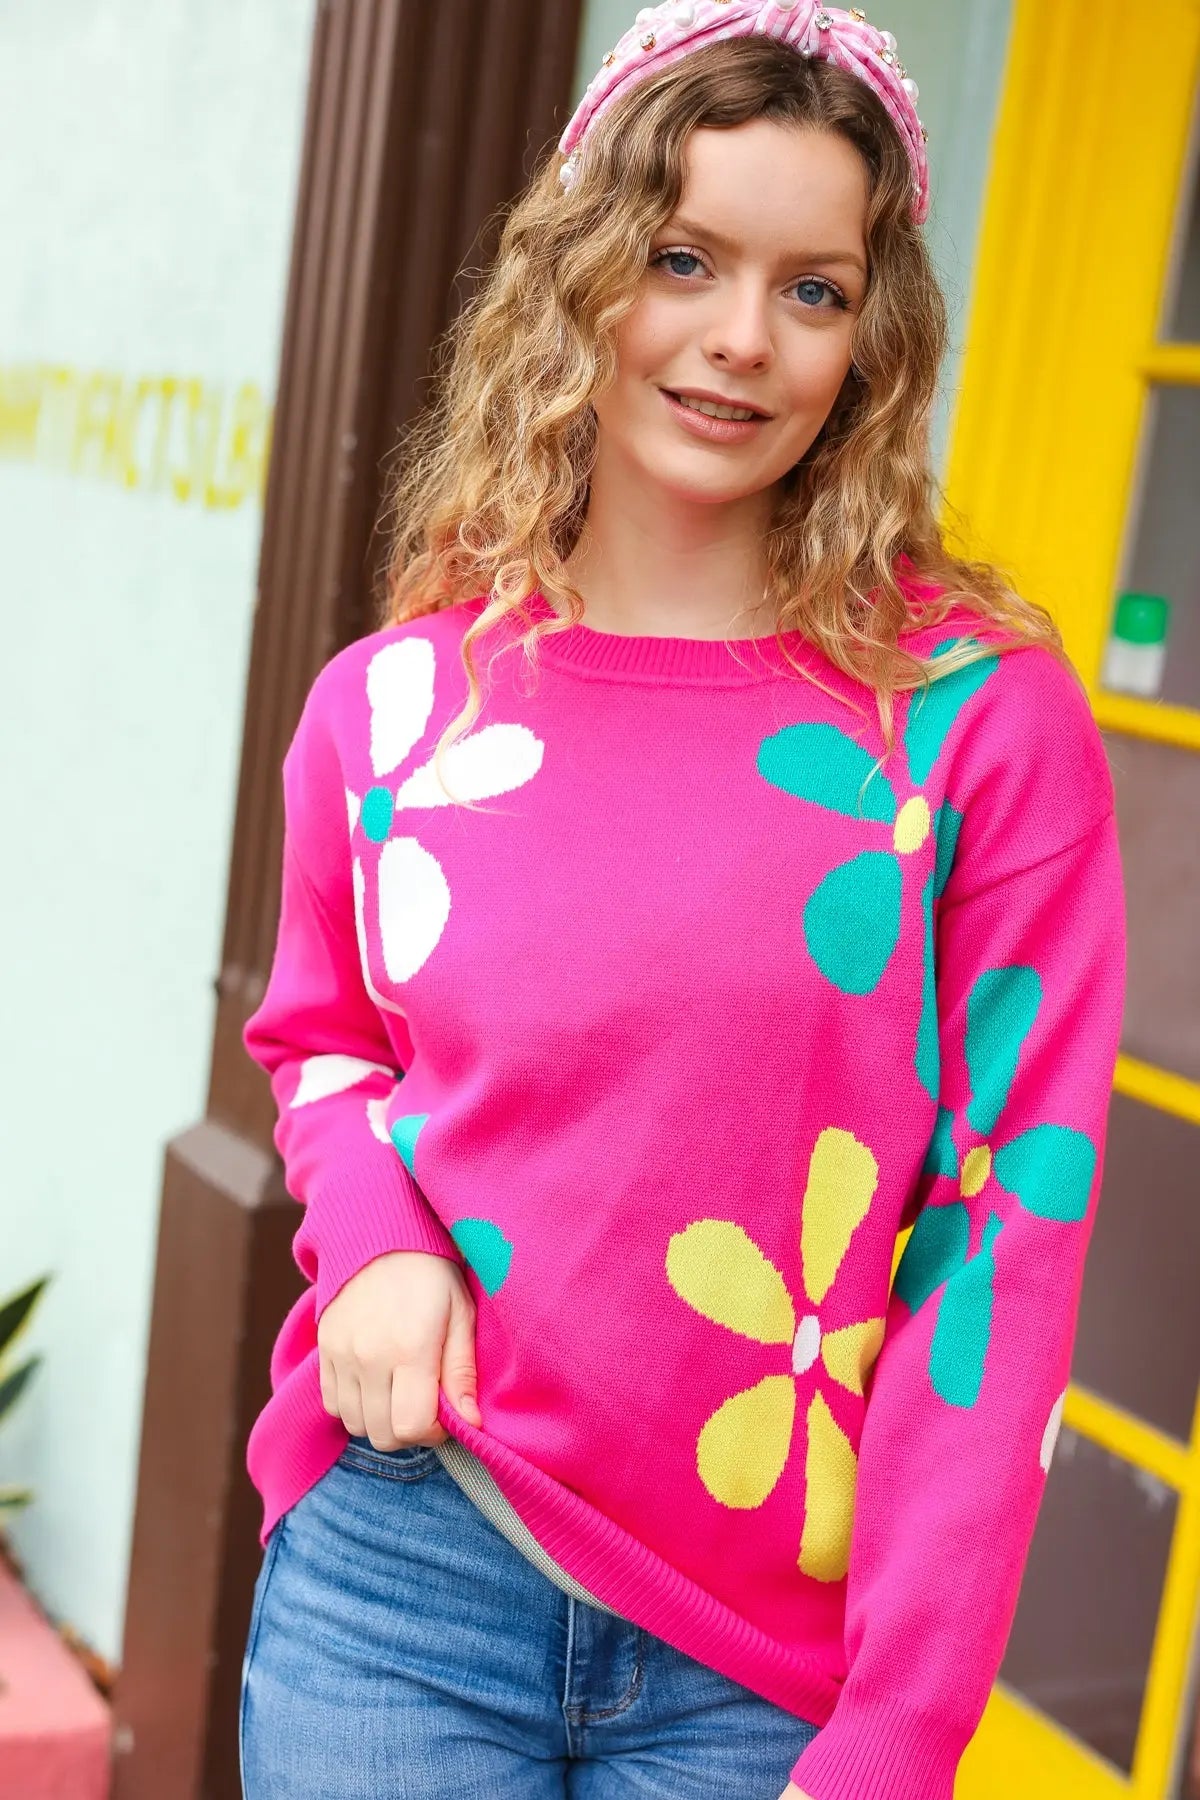 Flower Power Hot Pink Daisy Jacquard Pullover Sweater Haptics